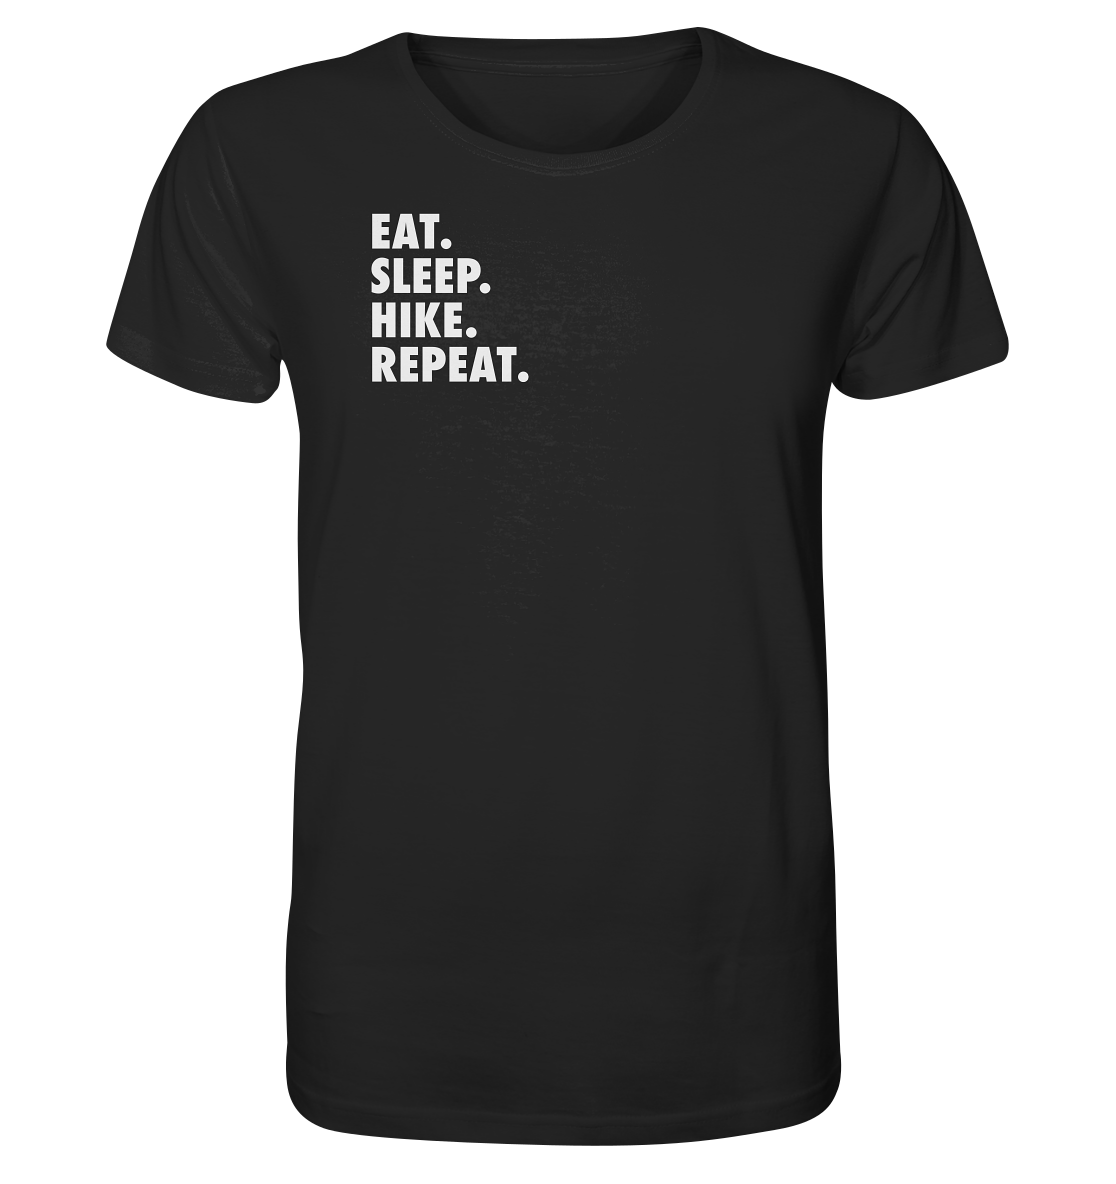 Eat. Sleep. Hike. Repeat. - Organic Shirt